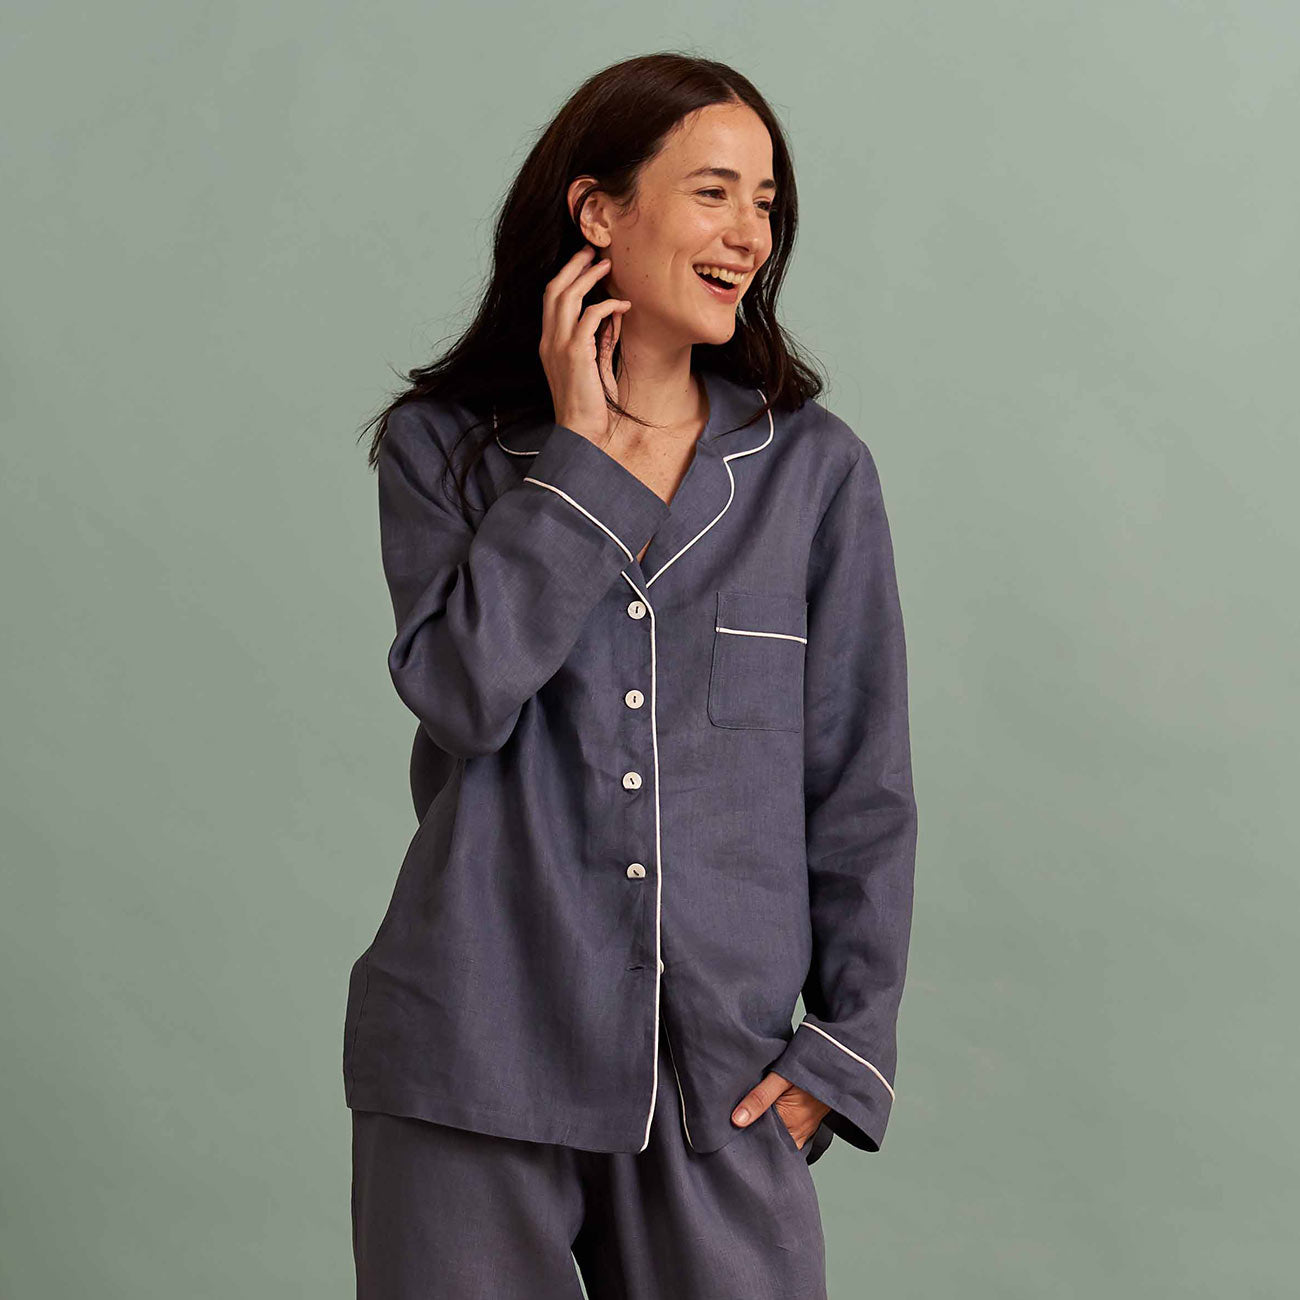 Women's Cotton Pajamas Sets